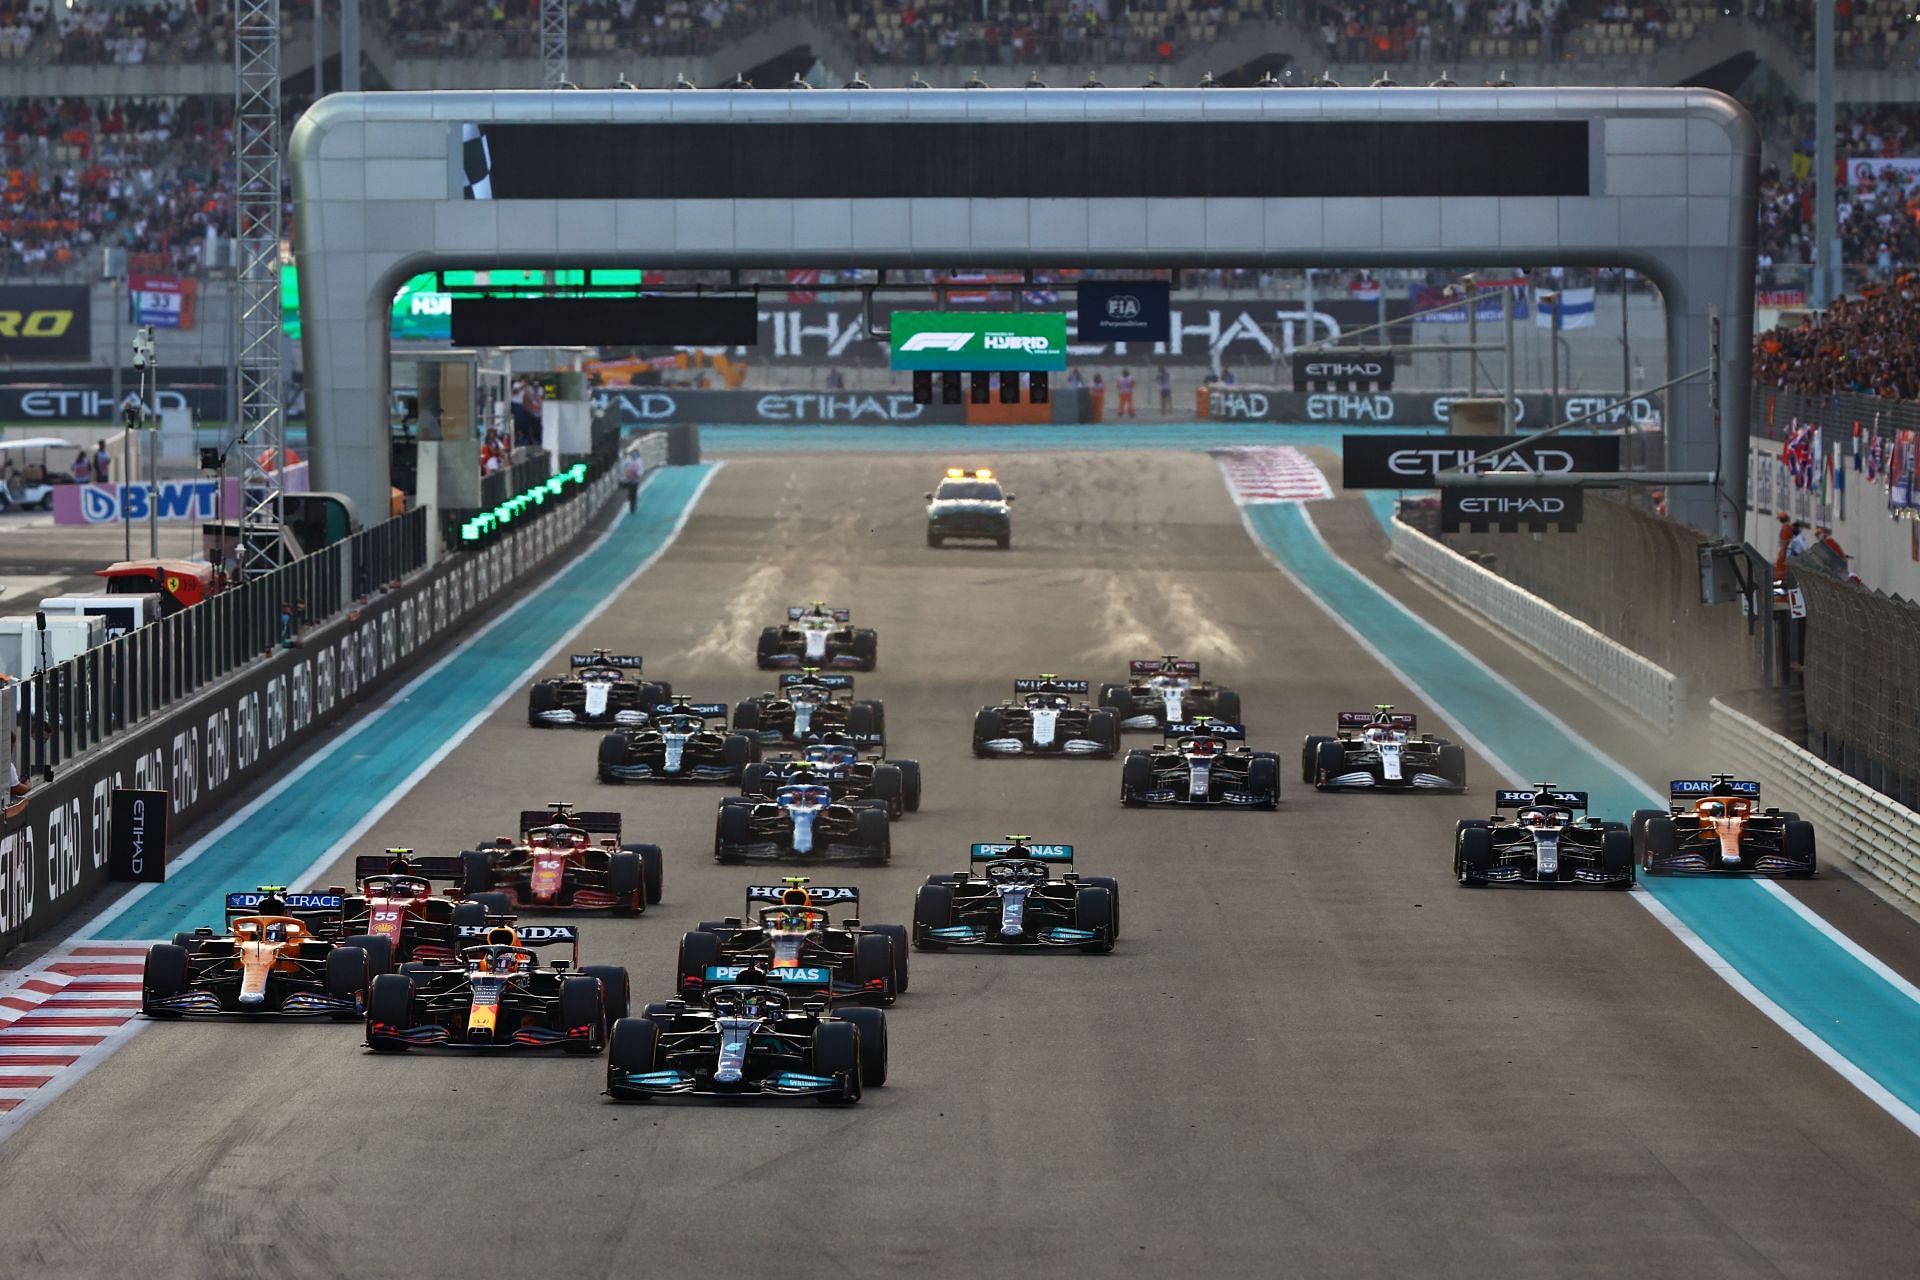 The Abu Dhabi GP is the F1 season finale